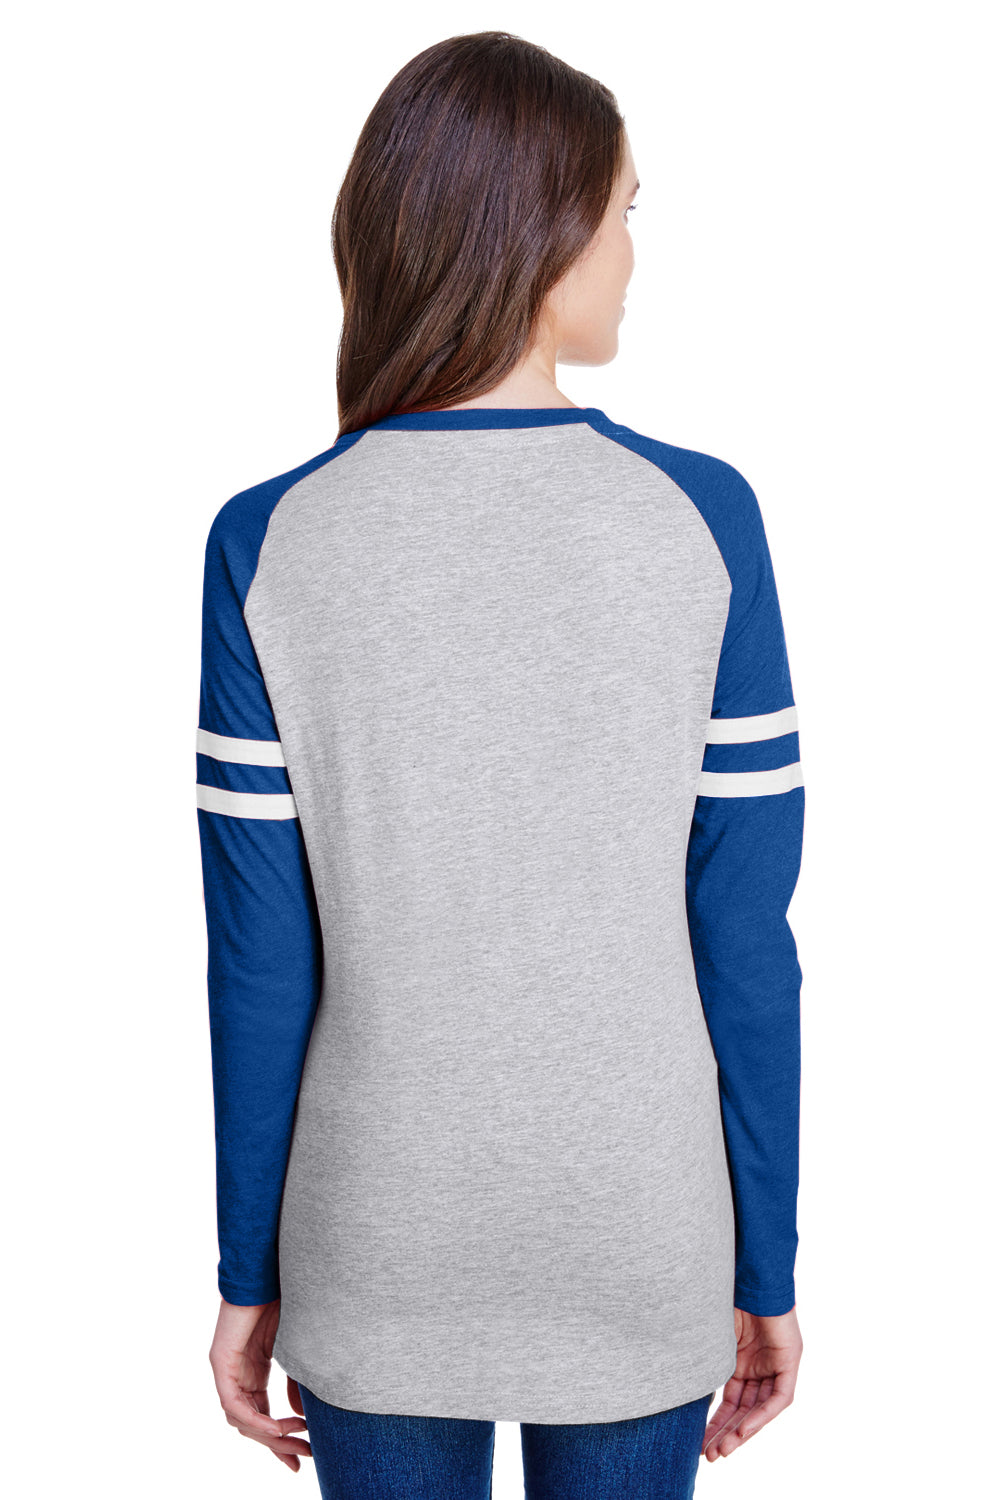 LAT 3534 Womens Gameday Mash Up Fine Jersey Long Sleeve V-Neck T-Shirt Heather Grey/Royal Blue Back